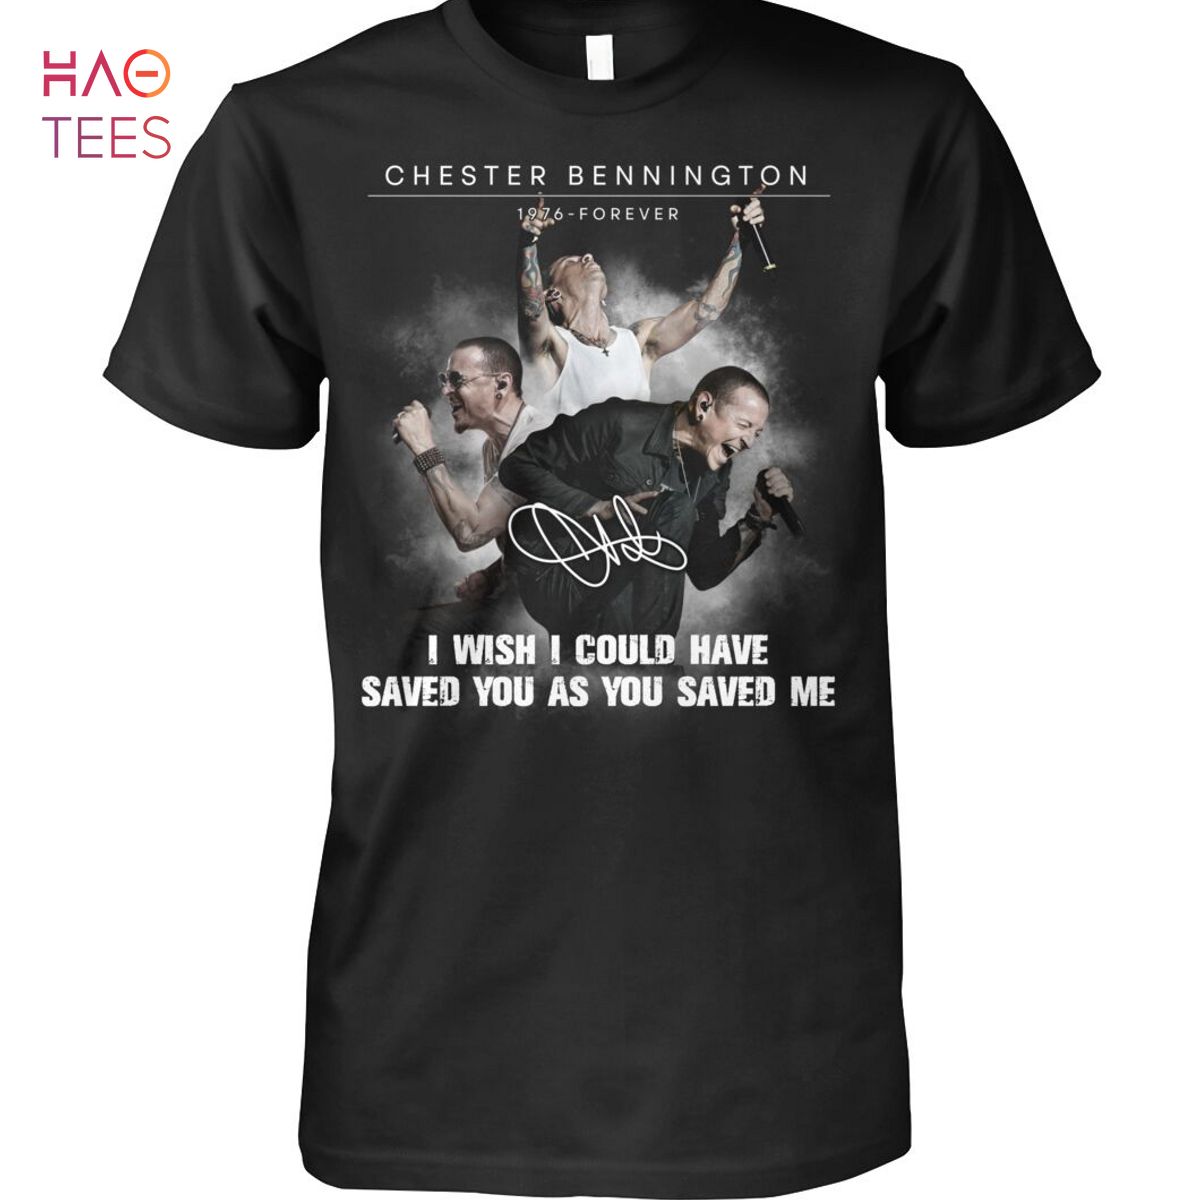 Chester Bennington Shirt Limited Edition